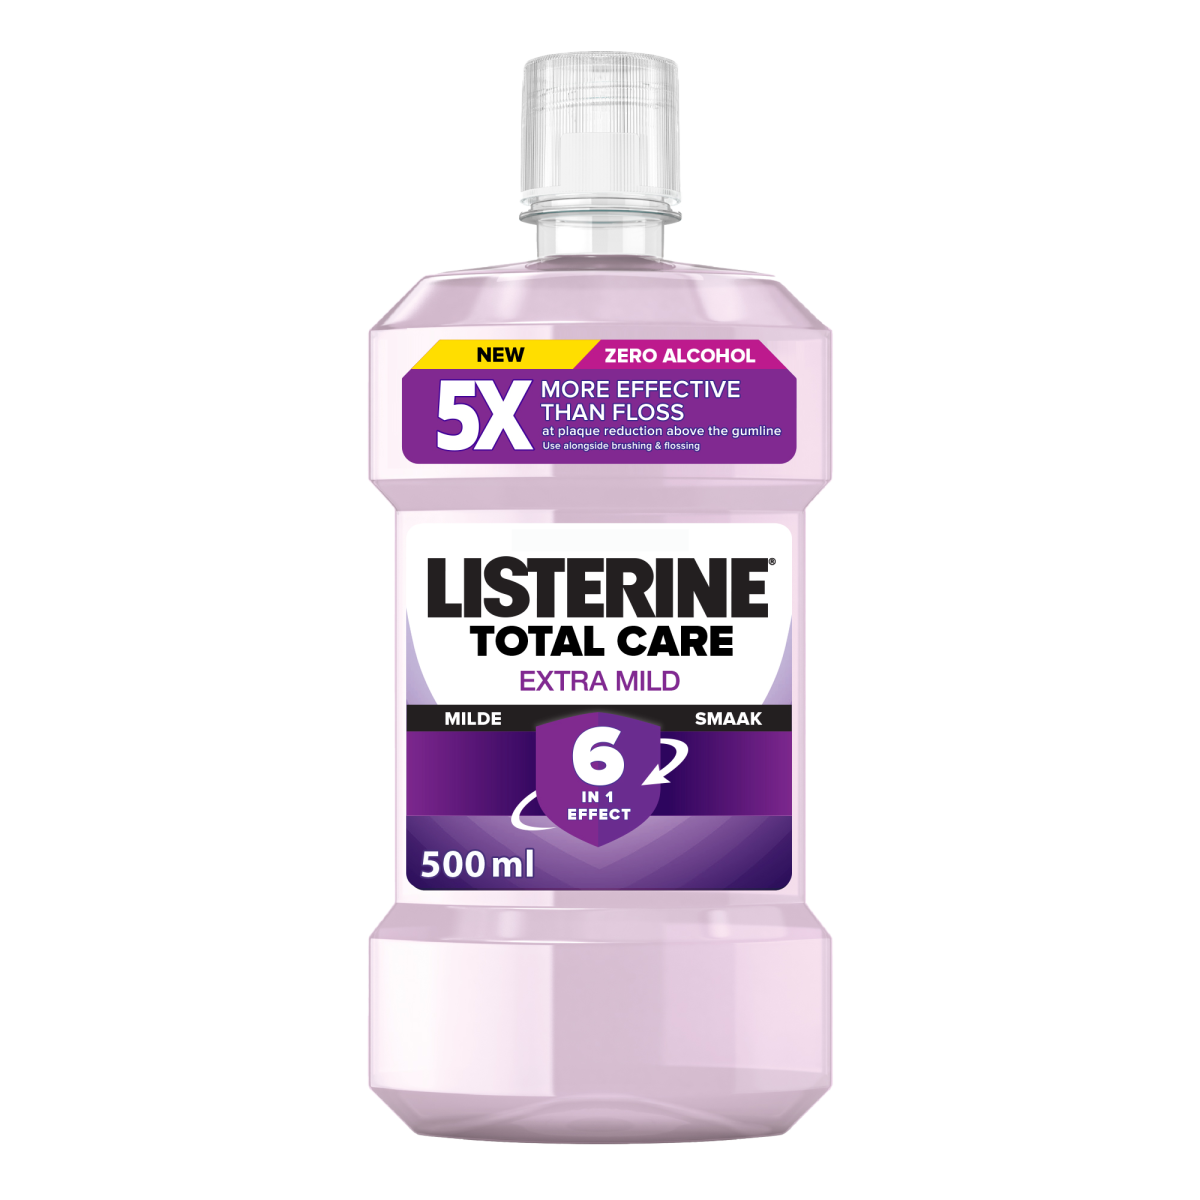 Listerine Total care extra mild